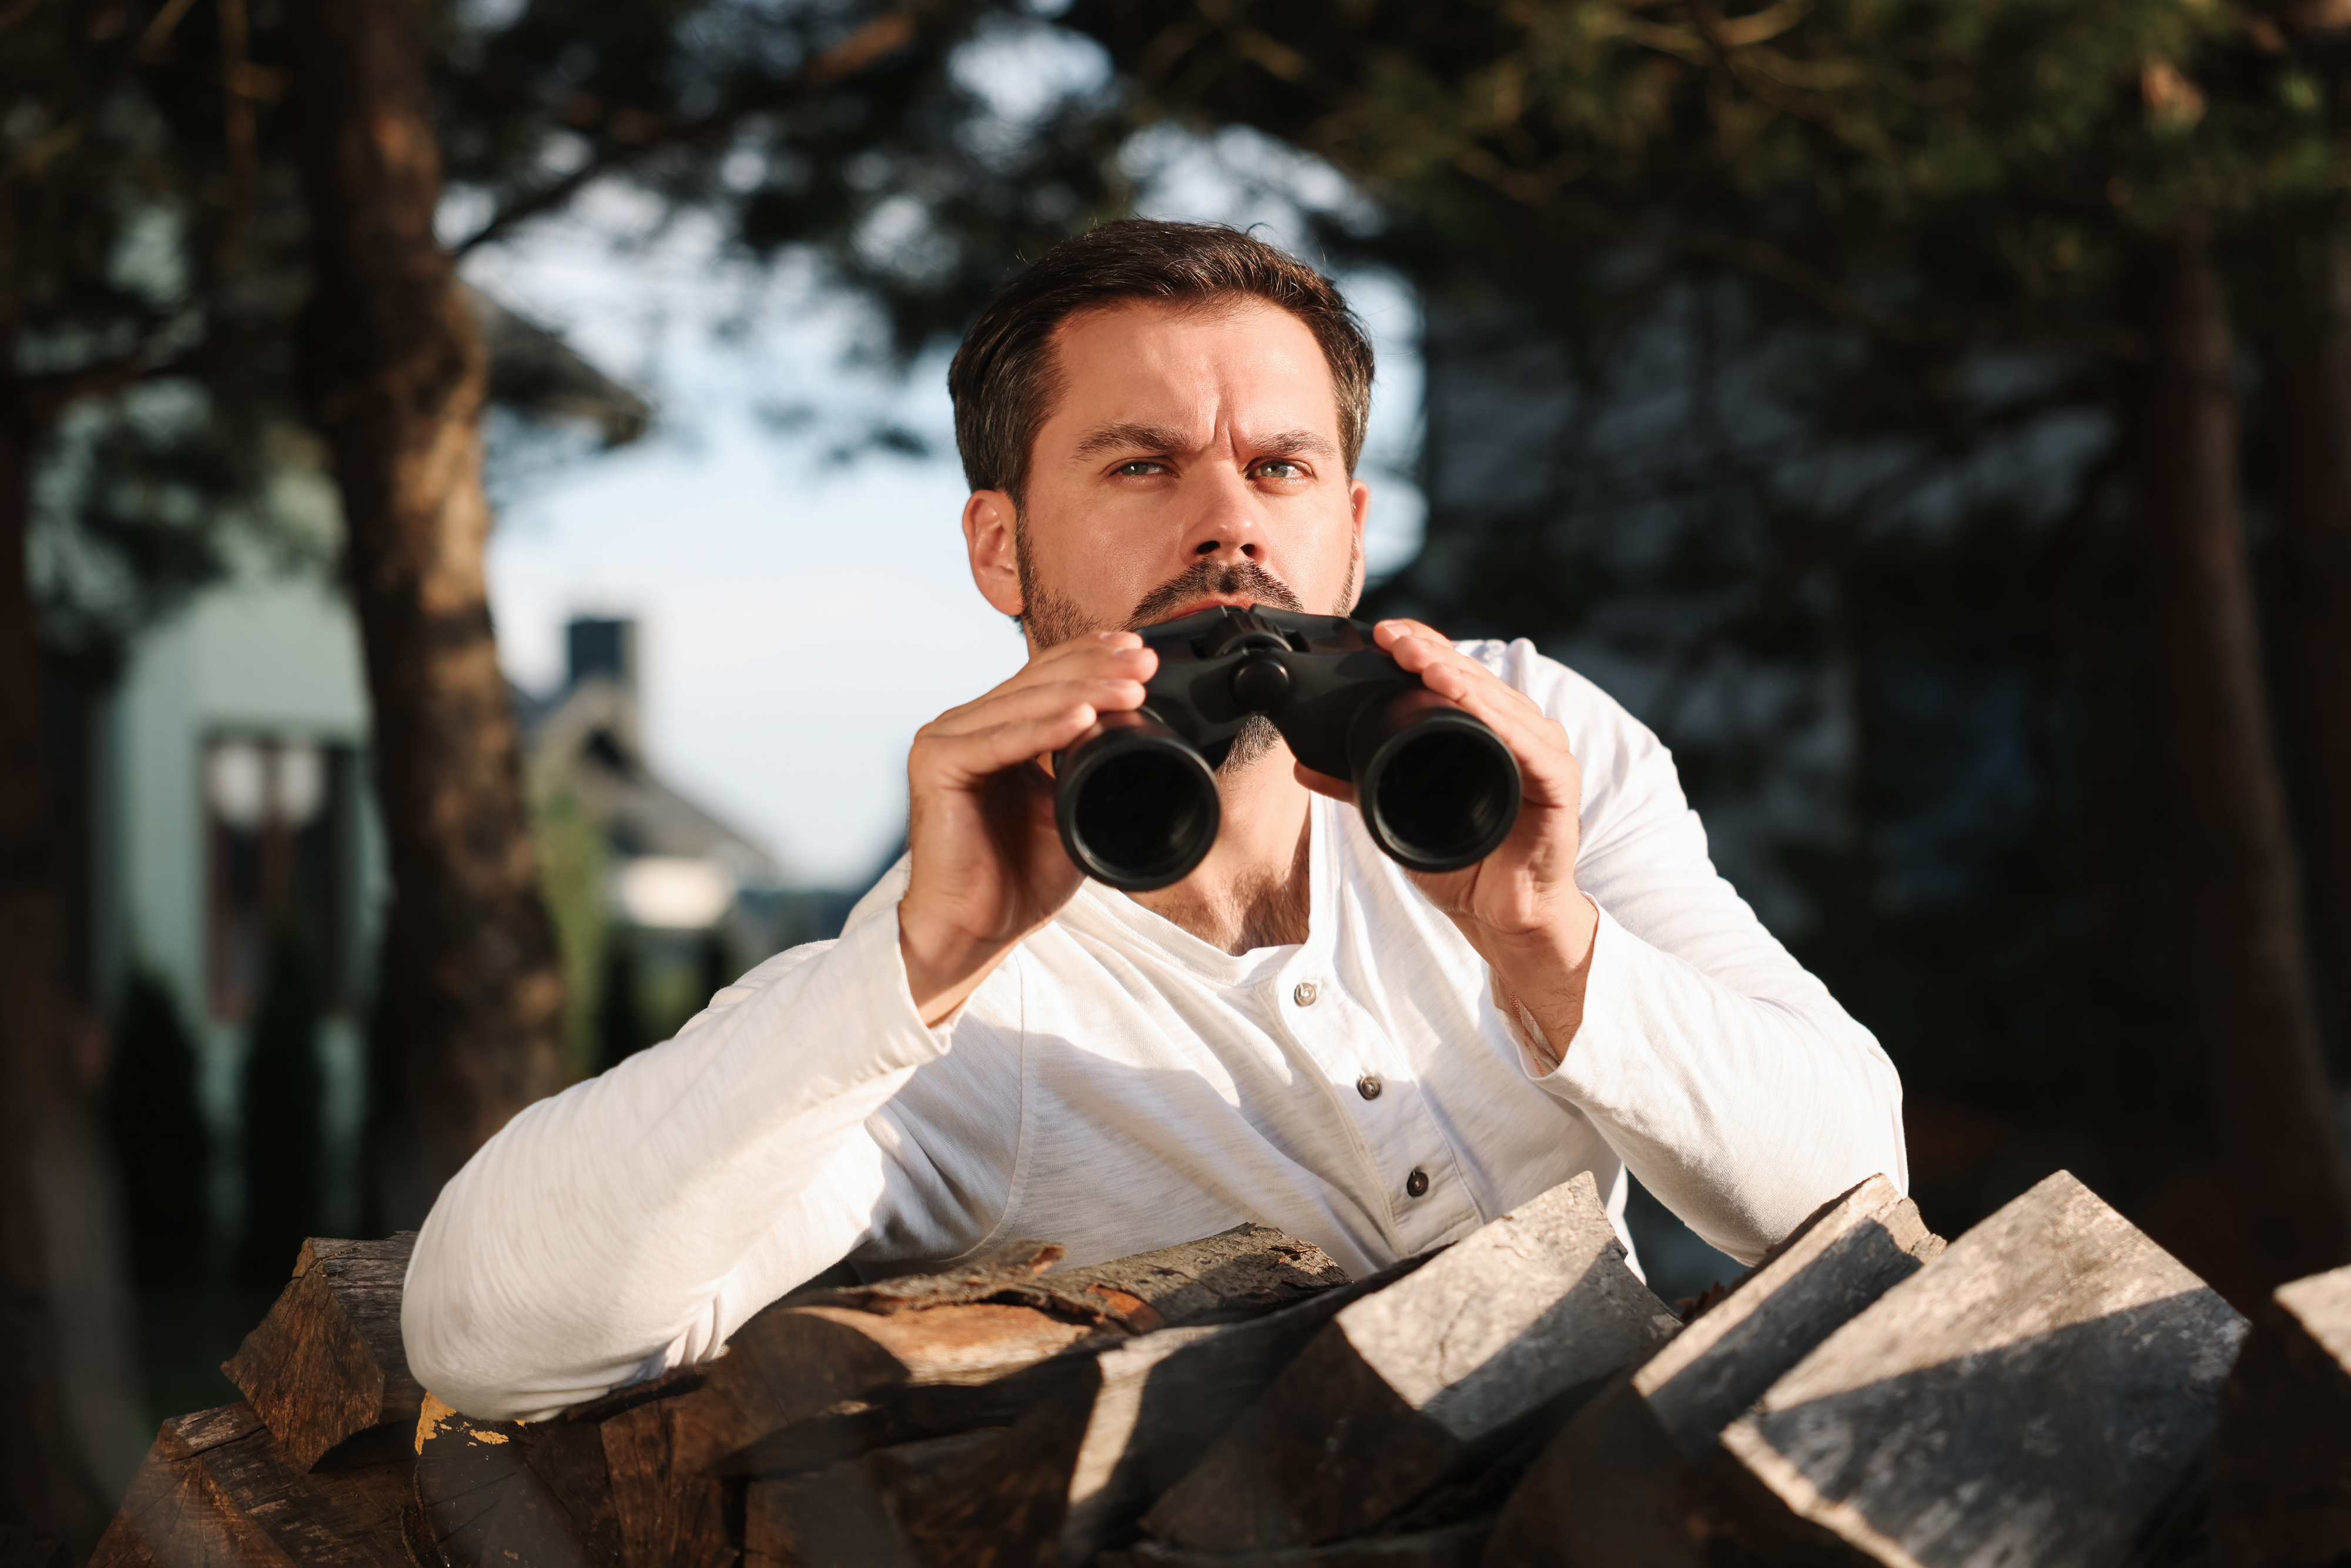 Man peering through binoculars over a pile of wood; expression focused